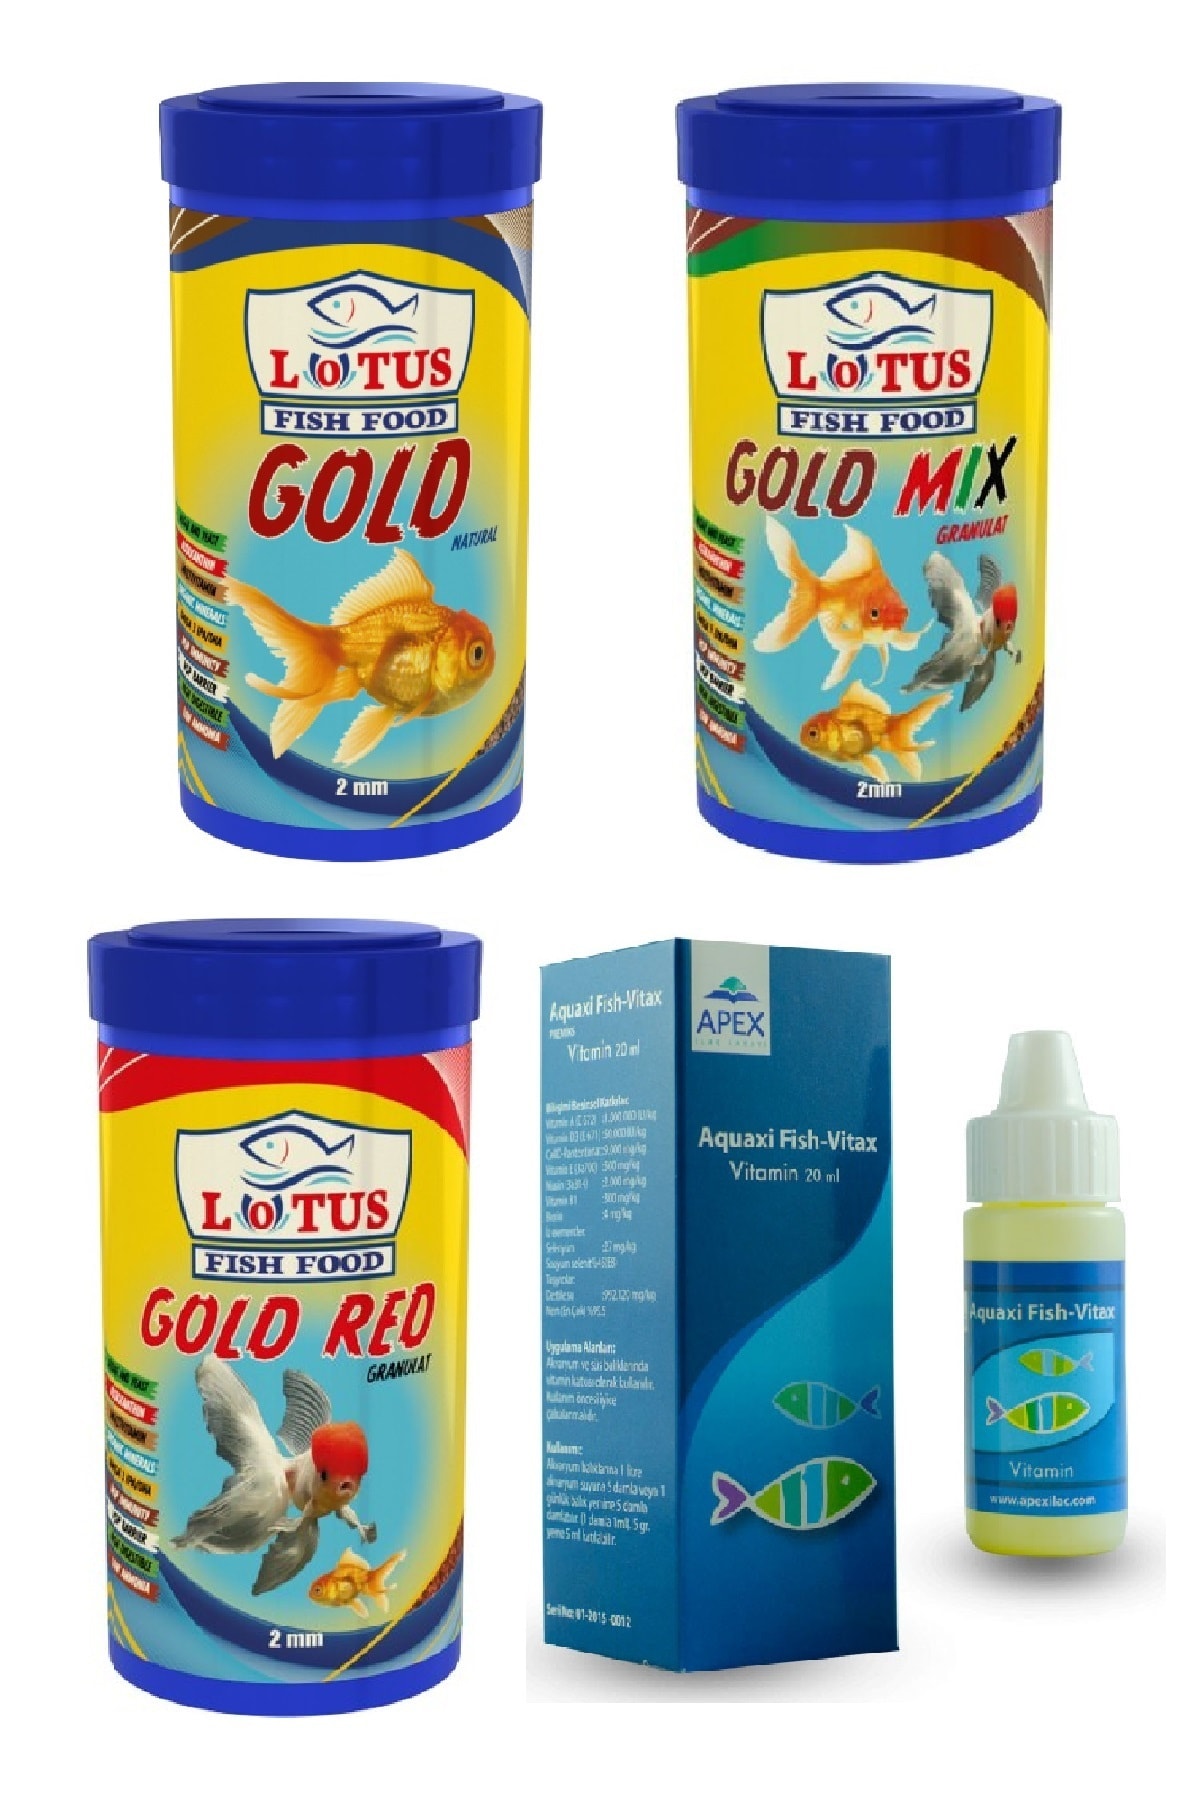 Lotus Japon Balığı Yem, Vitamin Seti, 250 Ml Gold Natural, 250 Ml Gold Mix, 250 Ml Gold Red, Vitamin